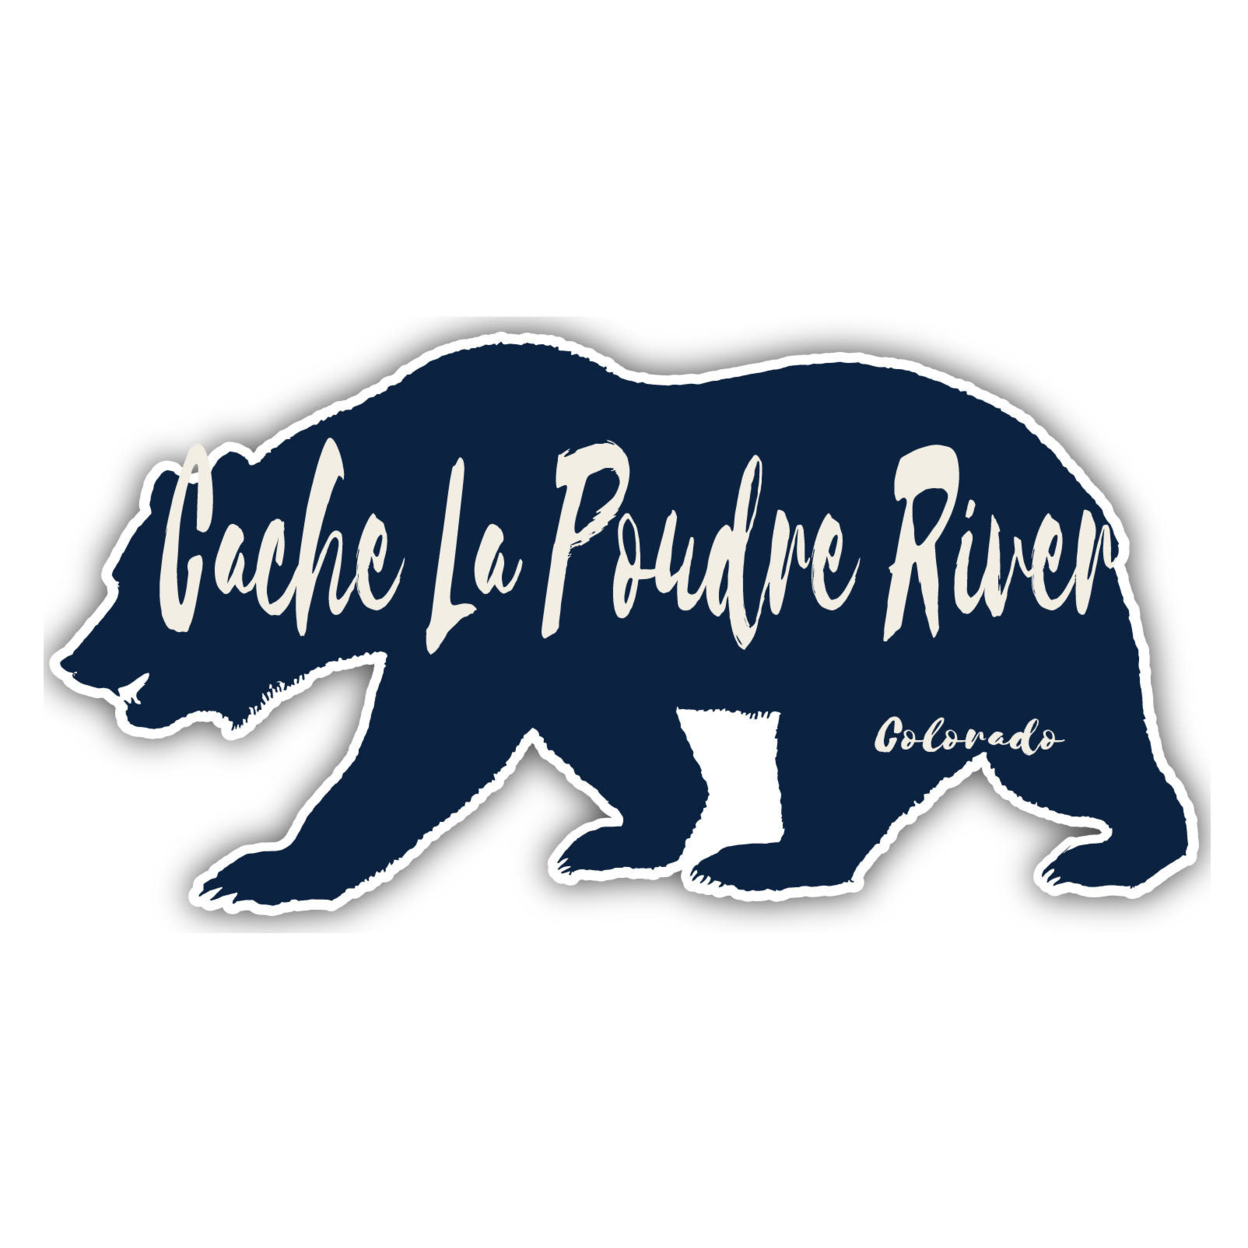 Cache La Poudre River Colorado Souvenir Decorative Stickers (Choose Theme And Size) - Single Unit, 8-Inch, Camp Life